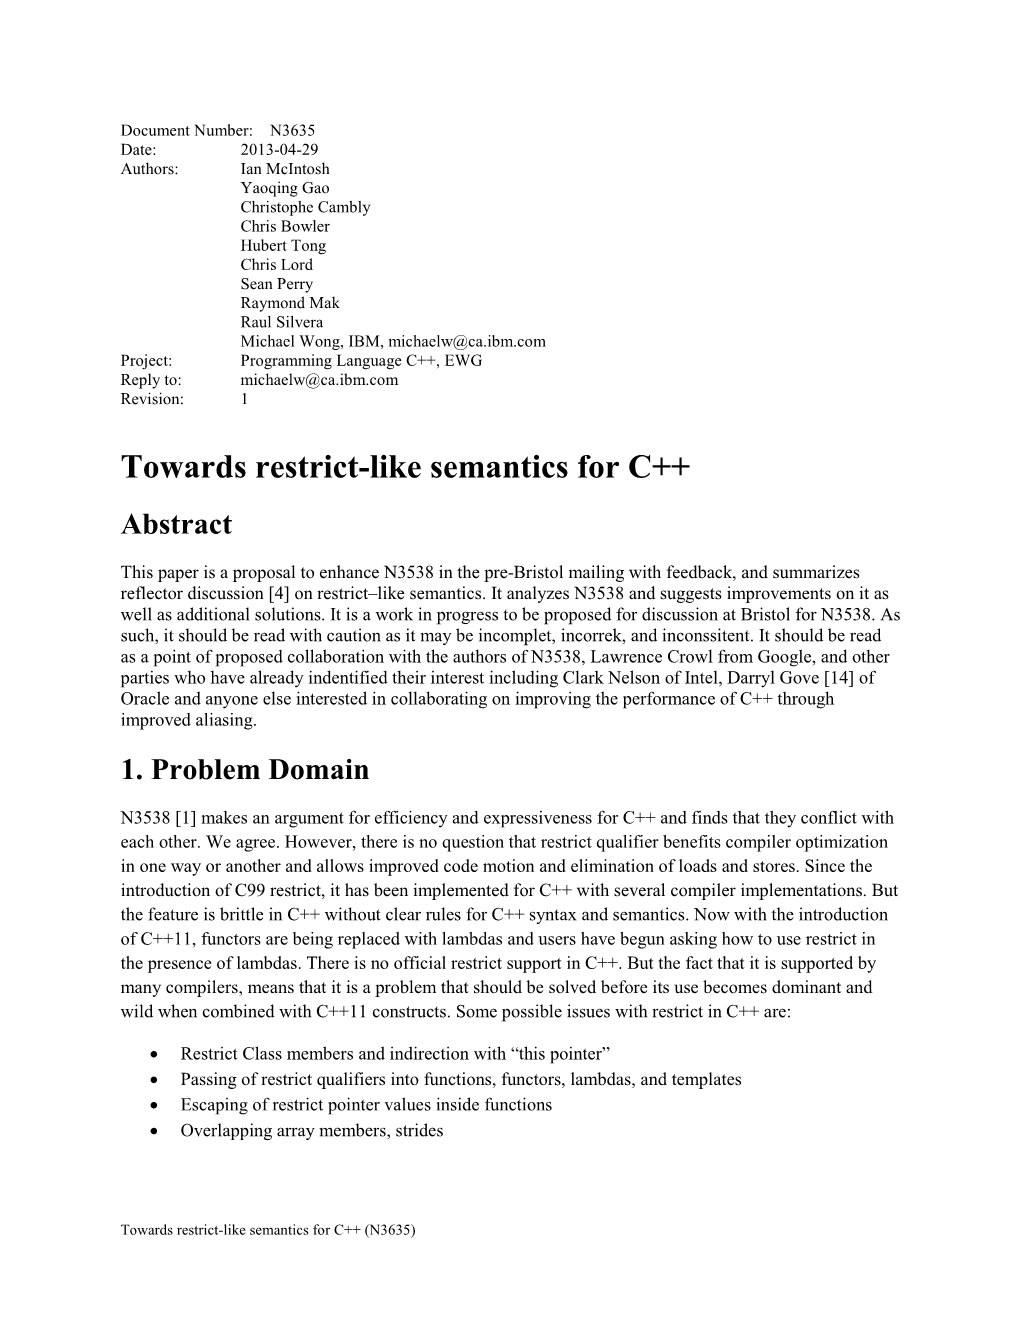 Towards Restrict-Like Semantics for C++